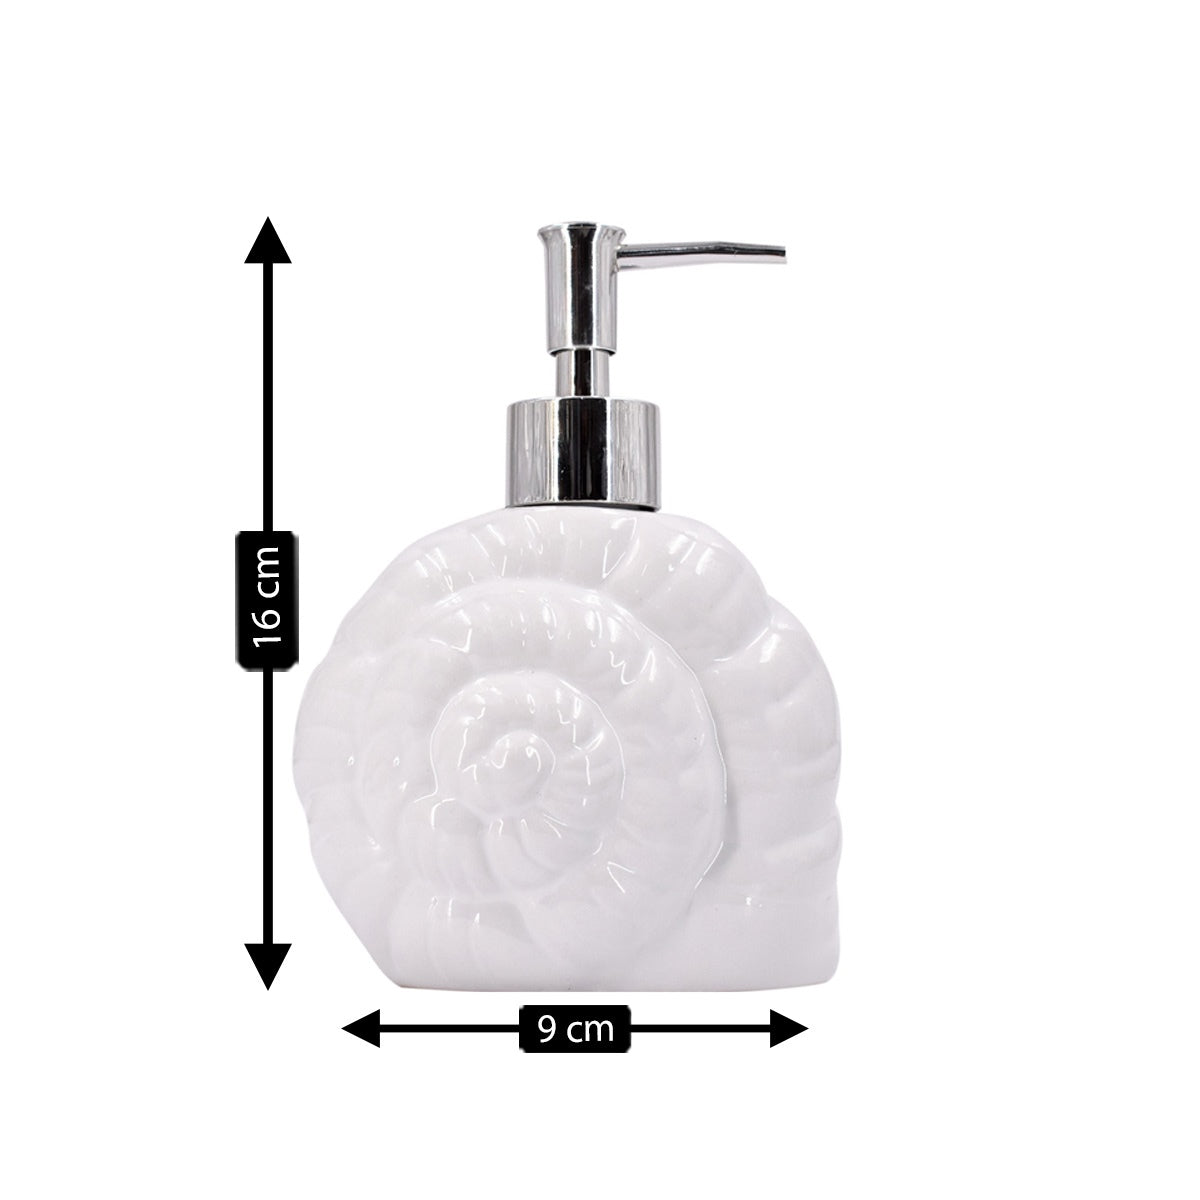 Ceramic Soap Dispenser Pump for Bathroom for Bath Gel, Lotion, Shampoo (8463)